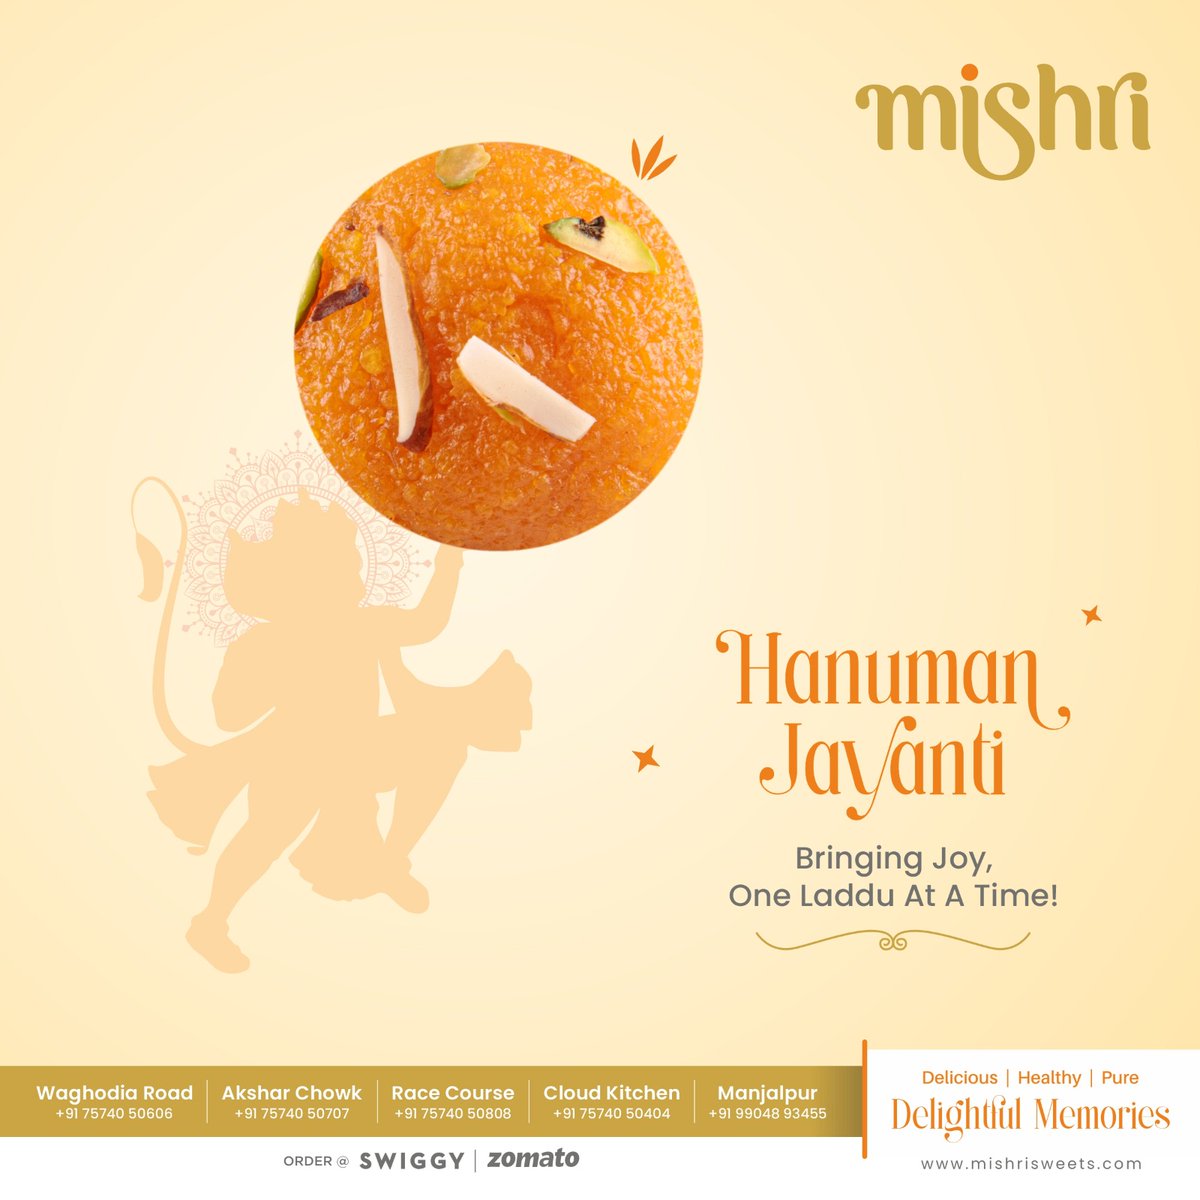 May Lord Hanuman bless you with strength and sweet happiness. 

Happy Hanuman Jayanti! 

#hanumanjayanti #jayshreeram🚩 #hanumanji #DivineCelebration #mishrisweets